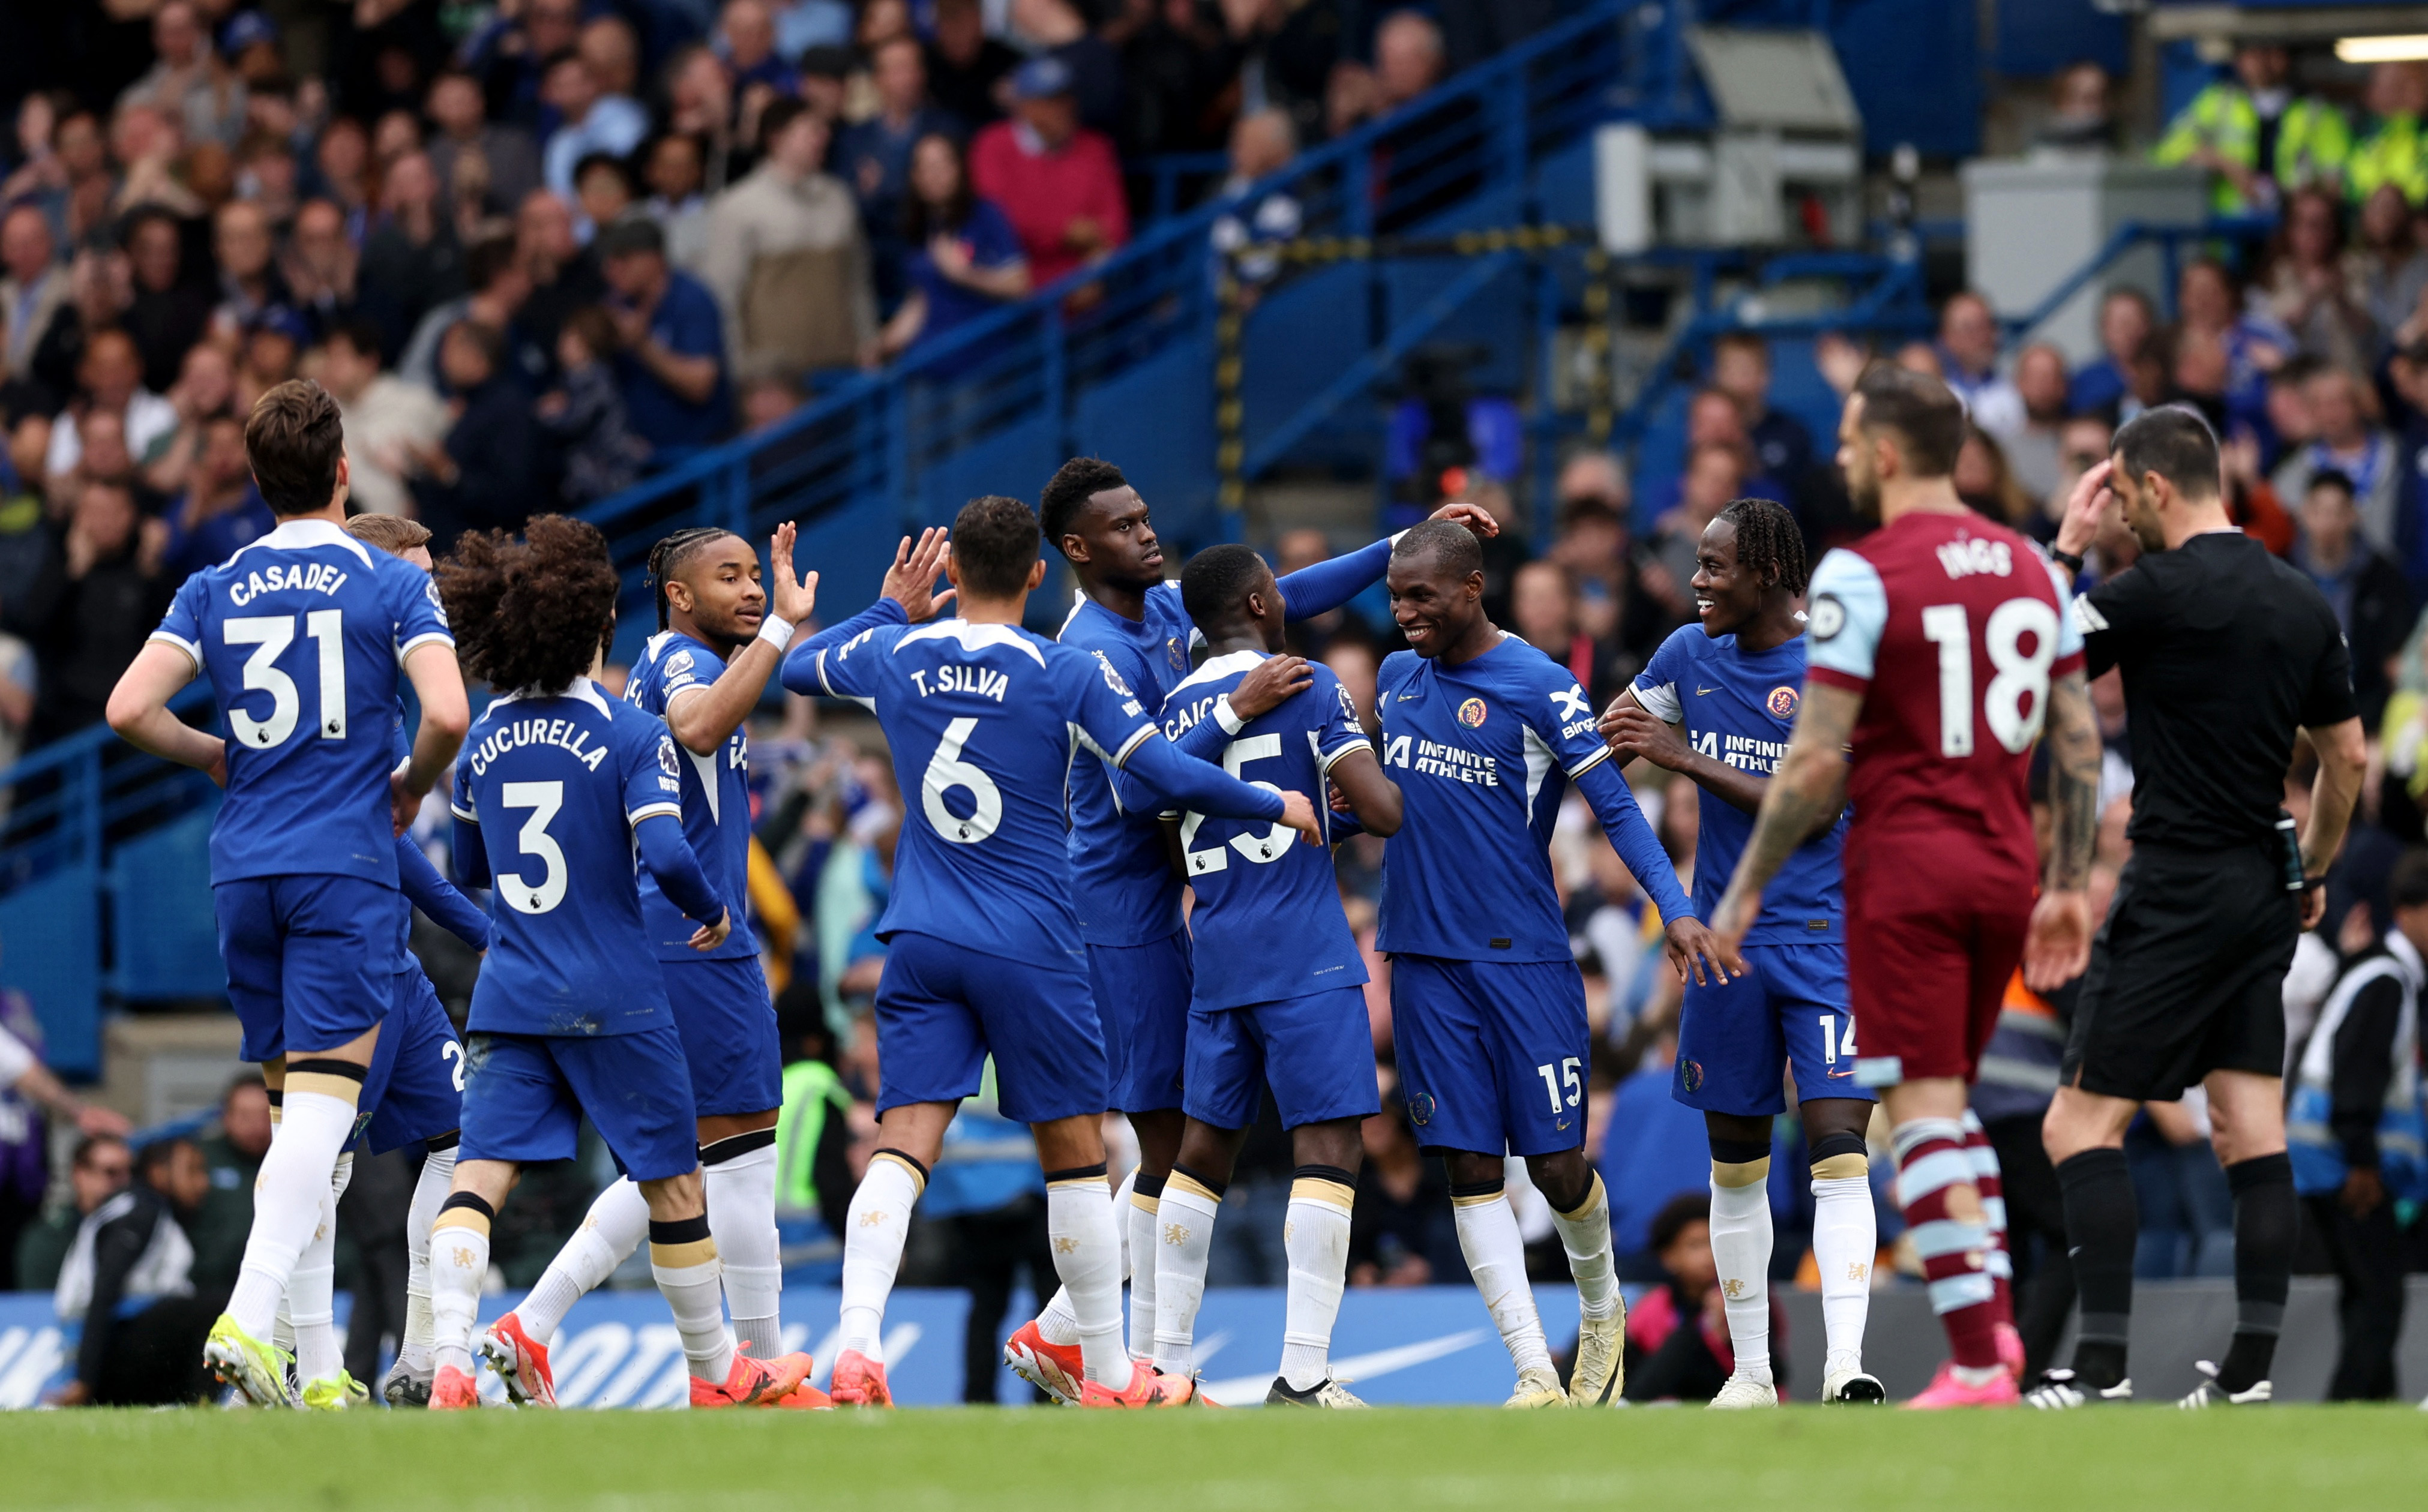 Chelsea boost European chances with 5-0 drubbing of West Ham | Reuters